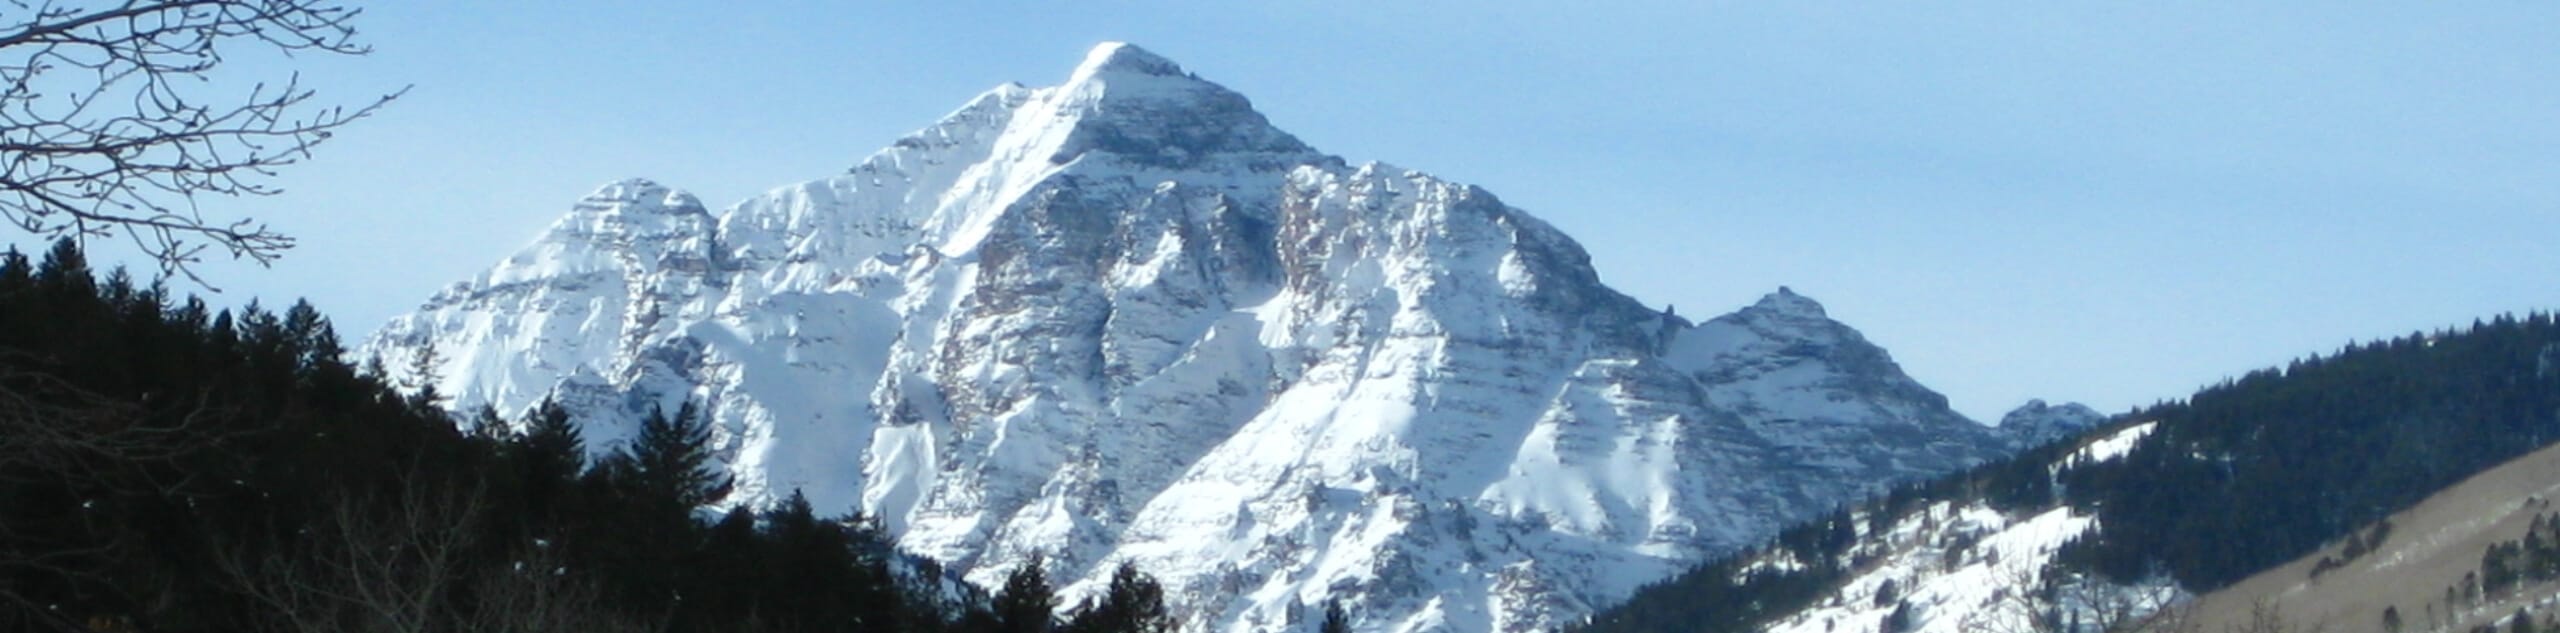 Pyramid Peak Trail